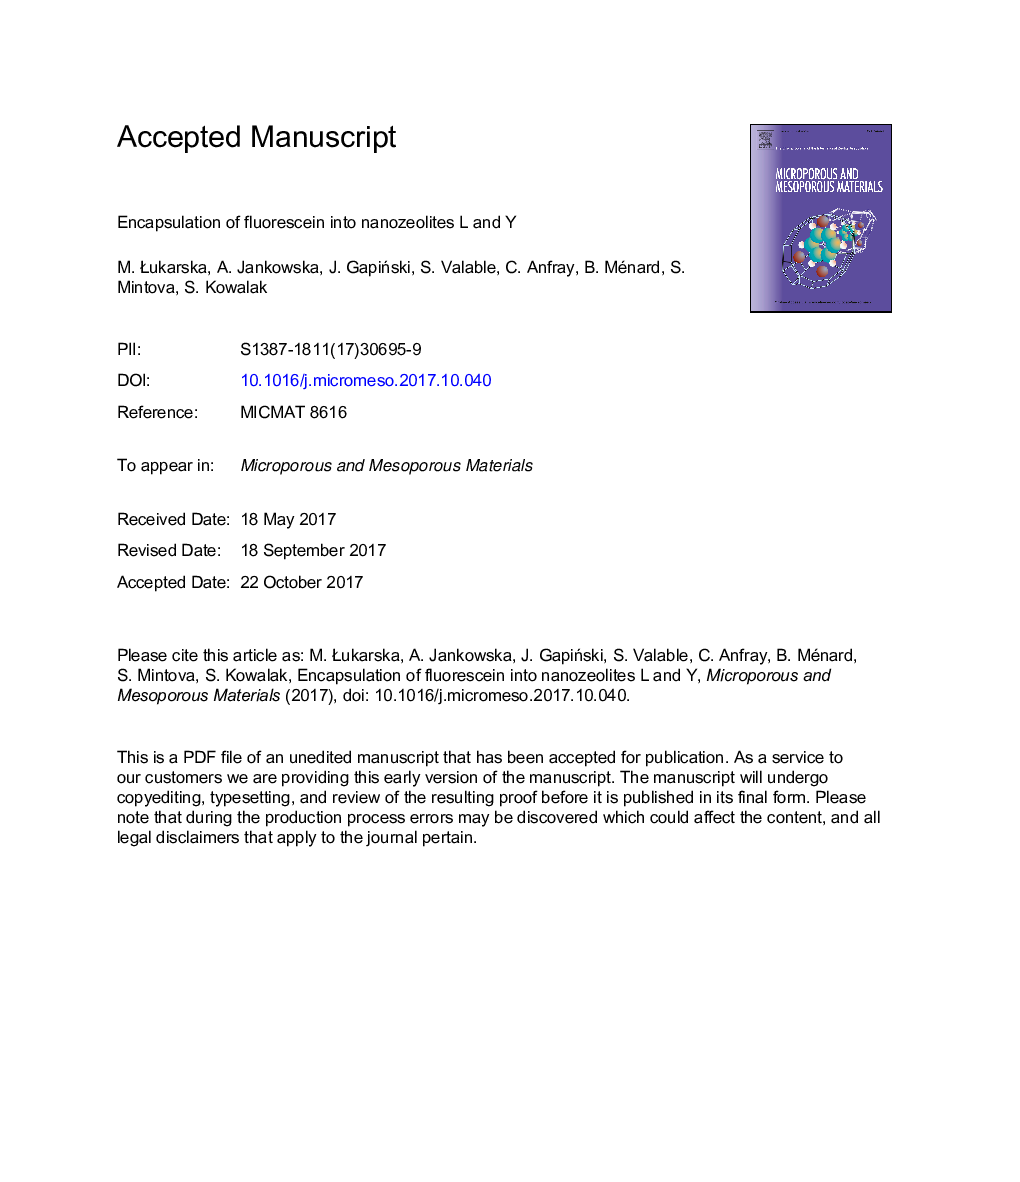 Encapsulation of fluorescein into nanozeolites L and Y